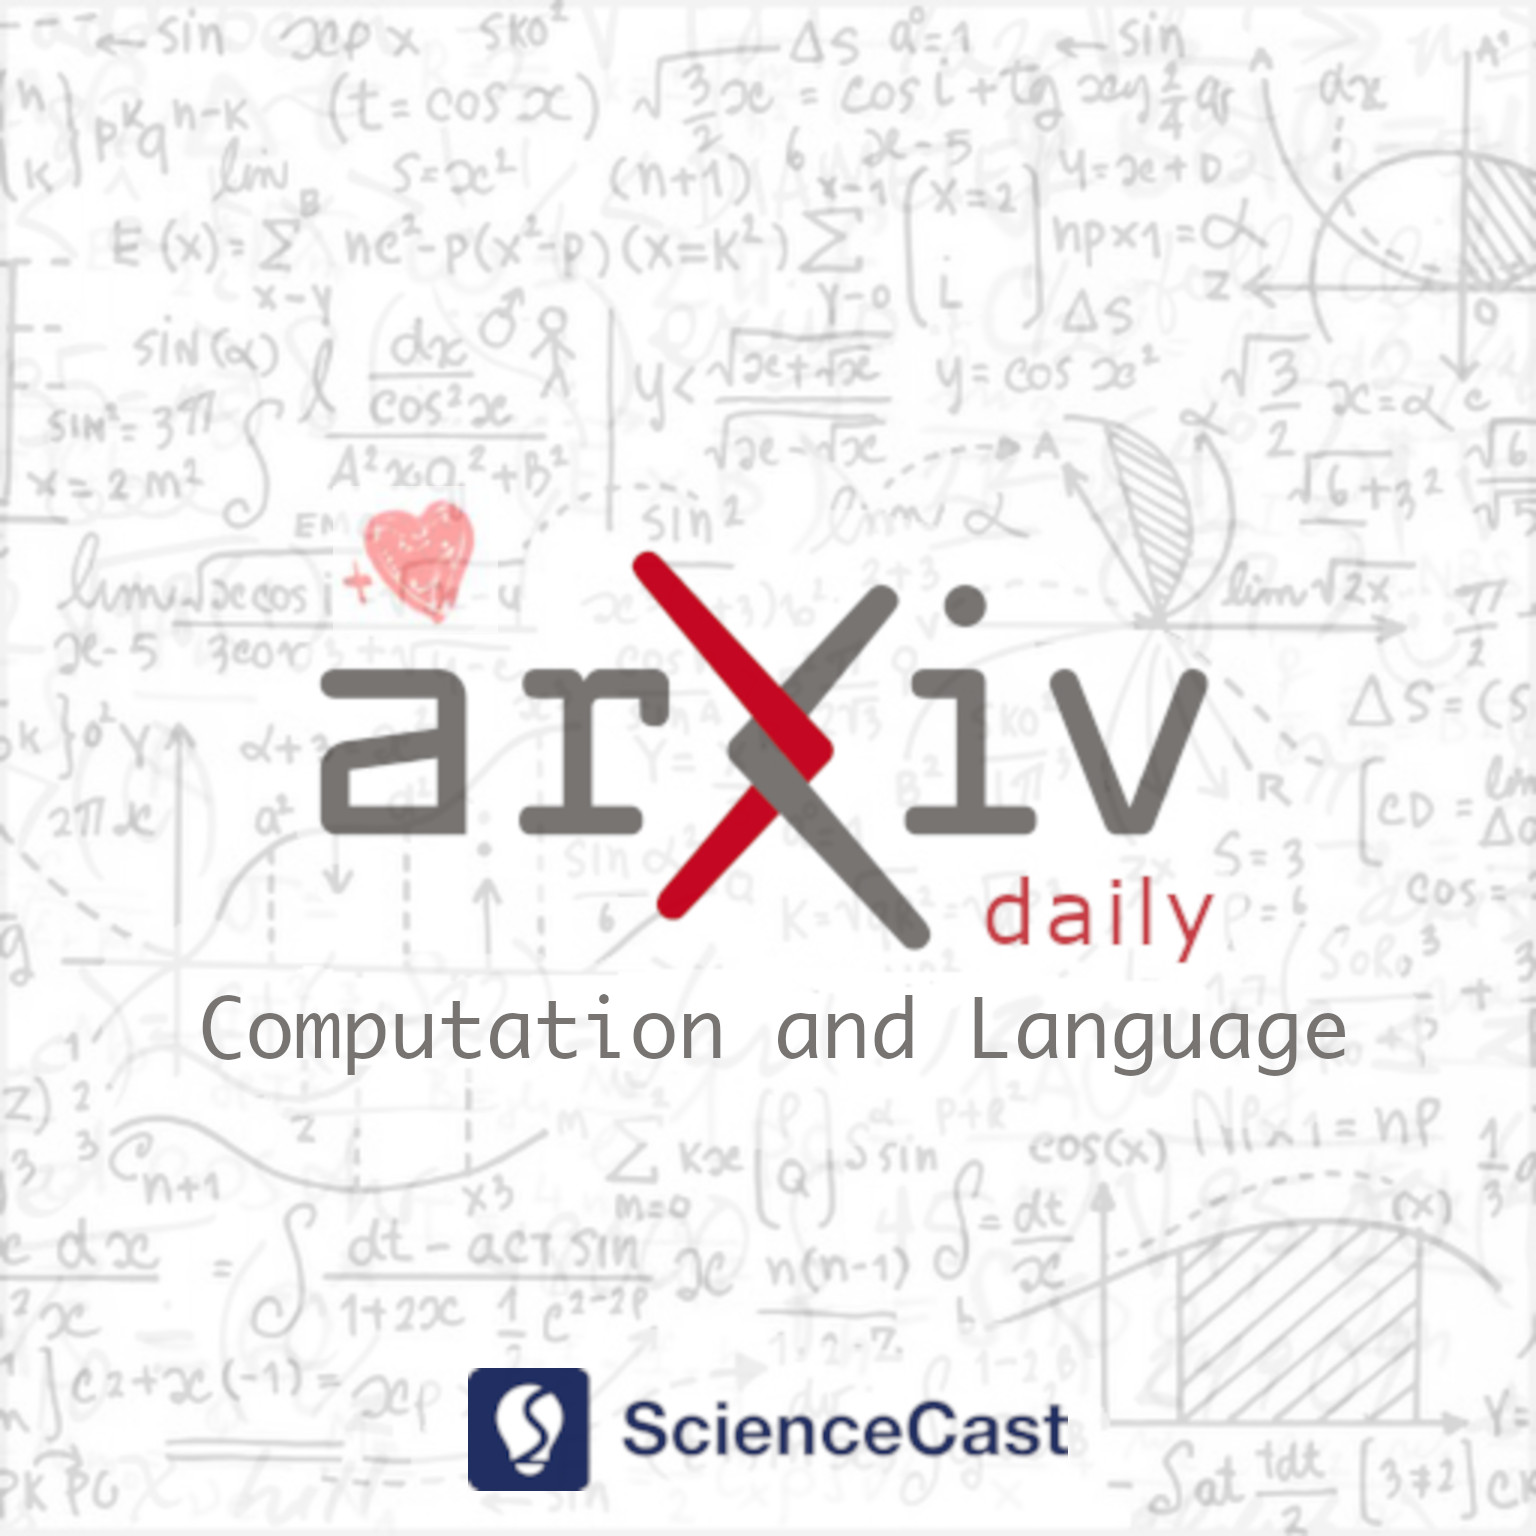 arXiv daily: Computation and Language